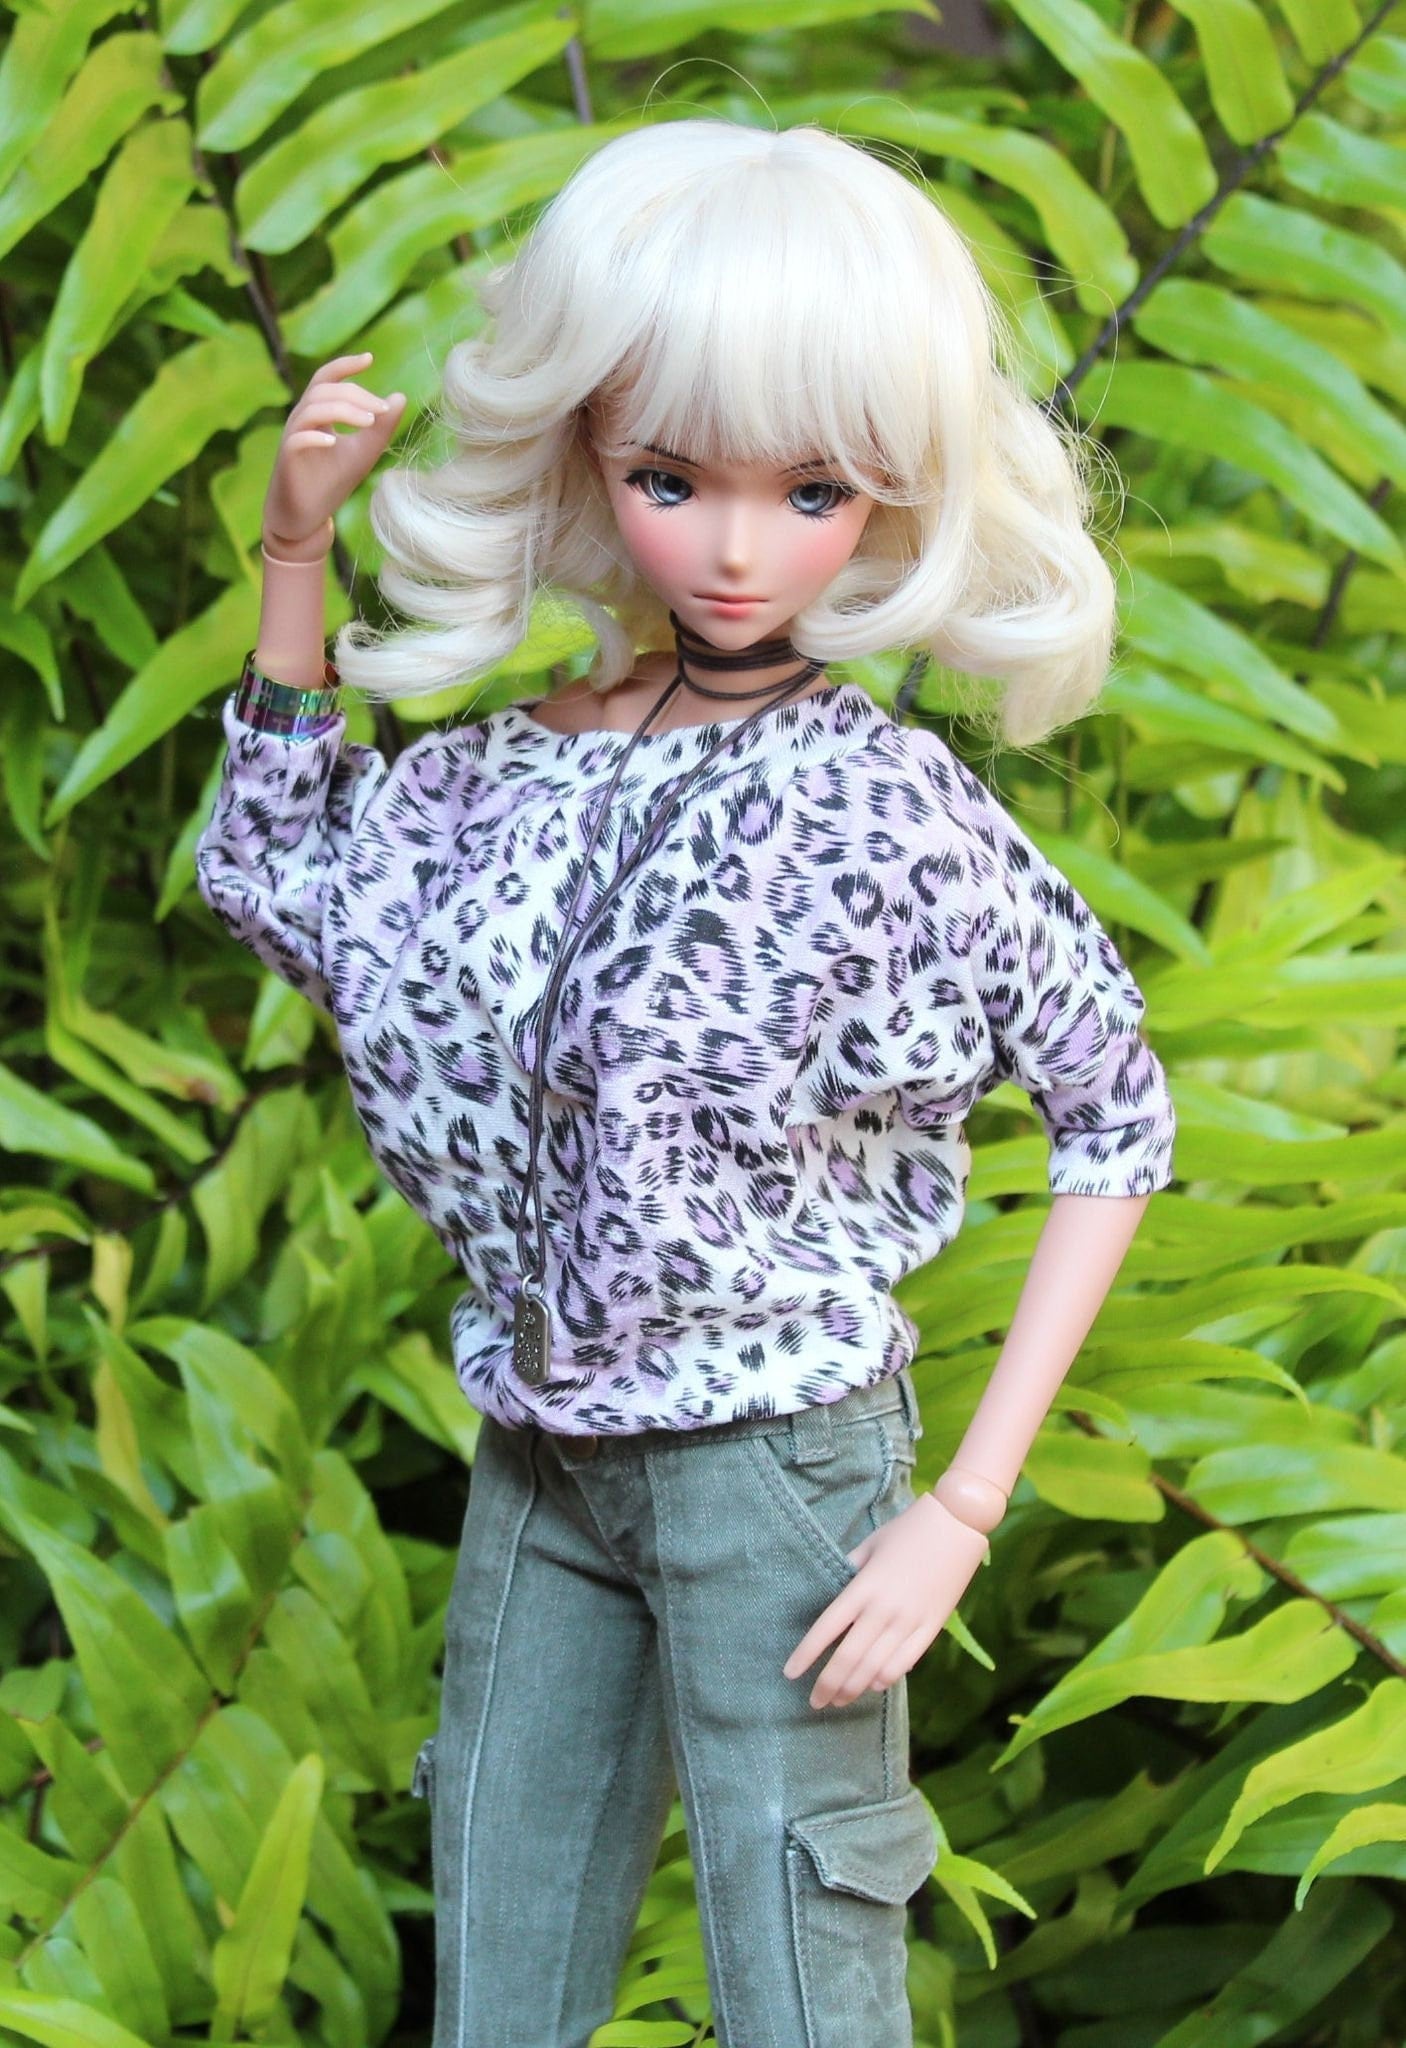 Custom doll Wig for Smart Dolls- Heat Safe - Tangle Resistant- 8.5" head size of Bjd, SD, Dollfie Dream dolls Blonde Limited